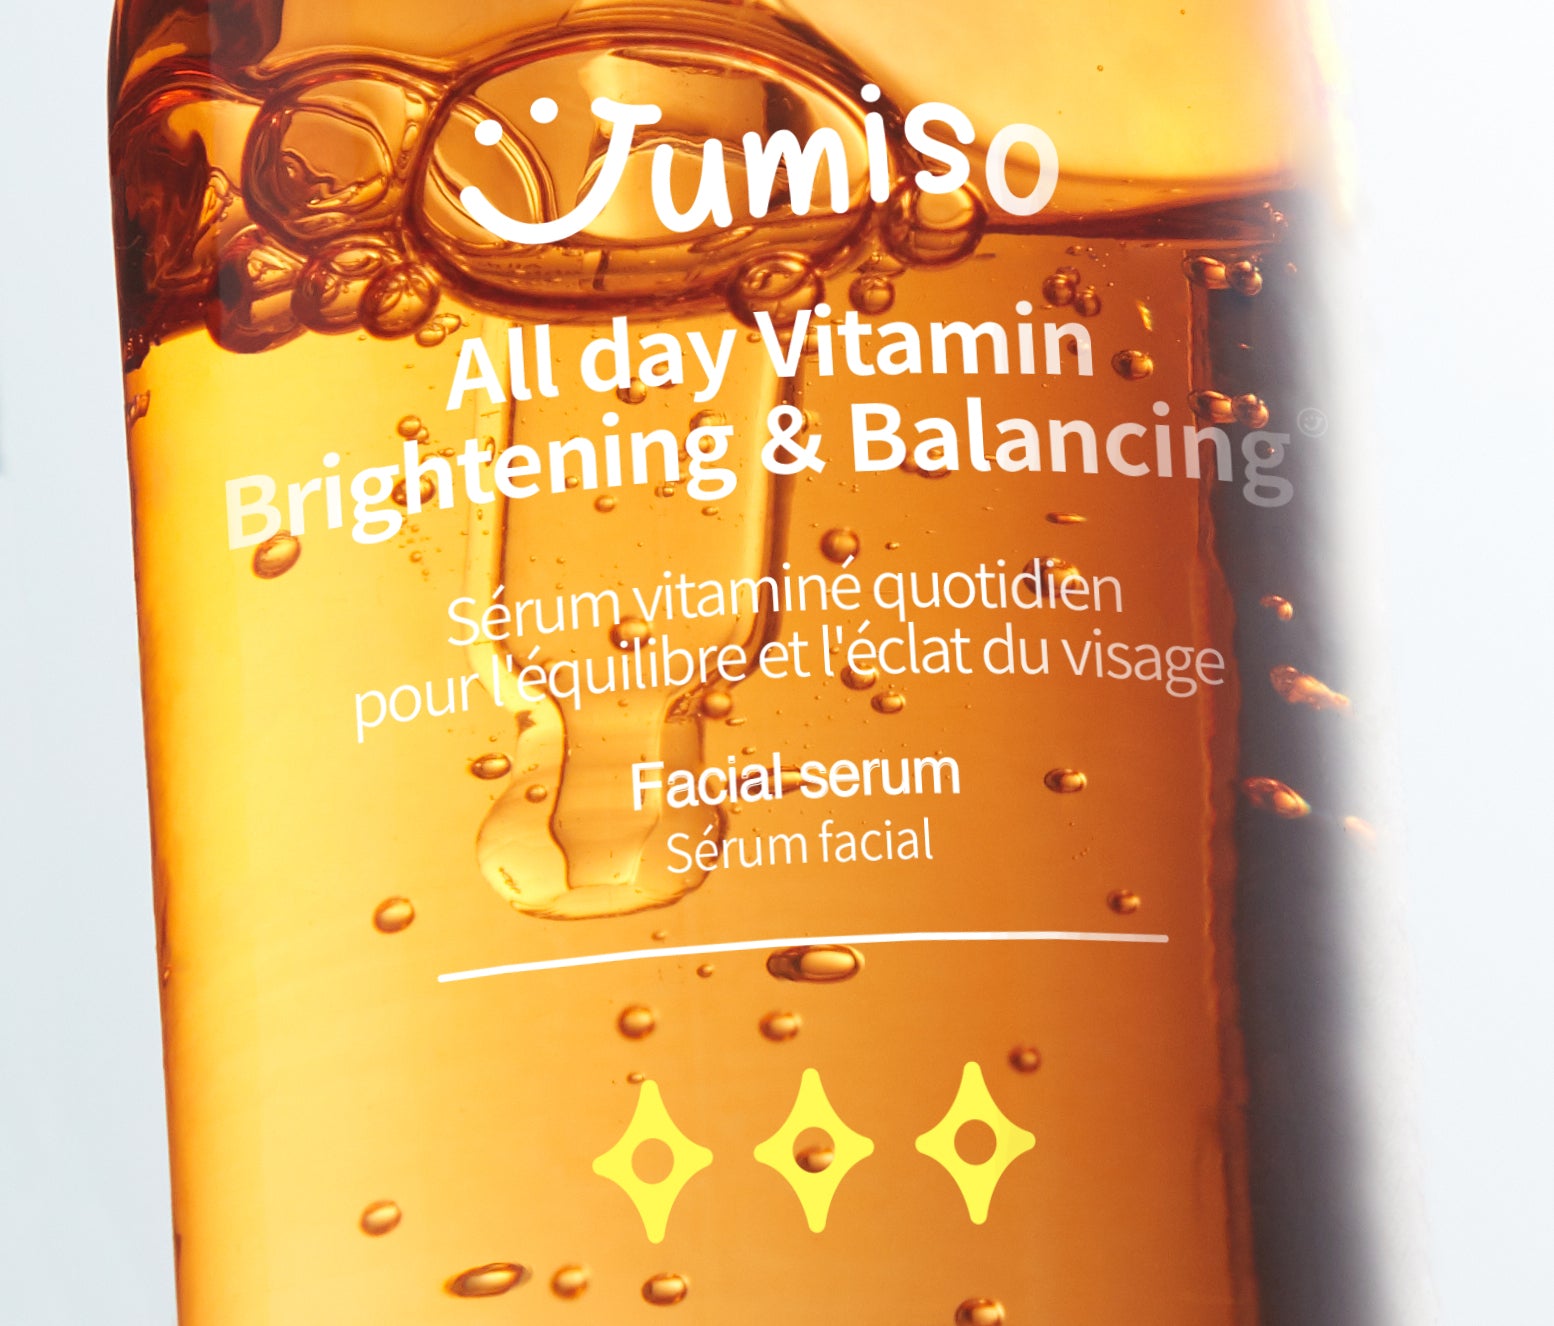 All Day Vitamin Brightening & Balancing Facial Serum